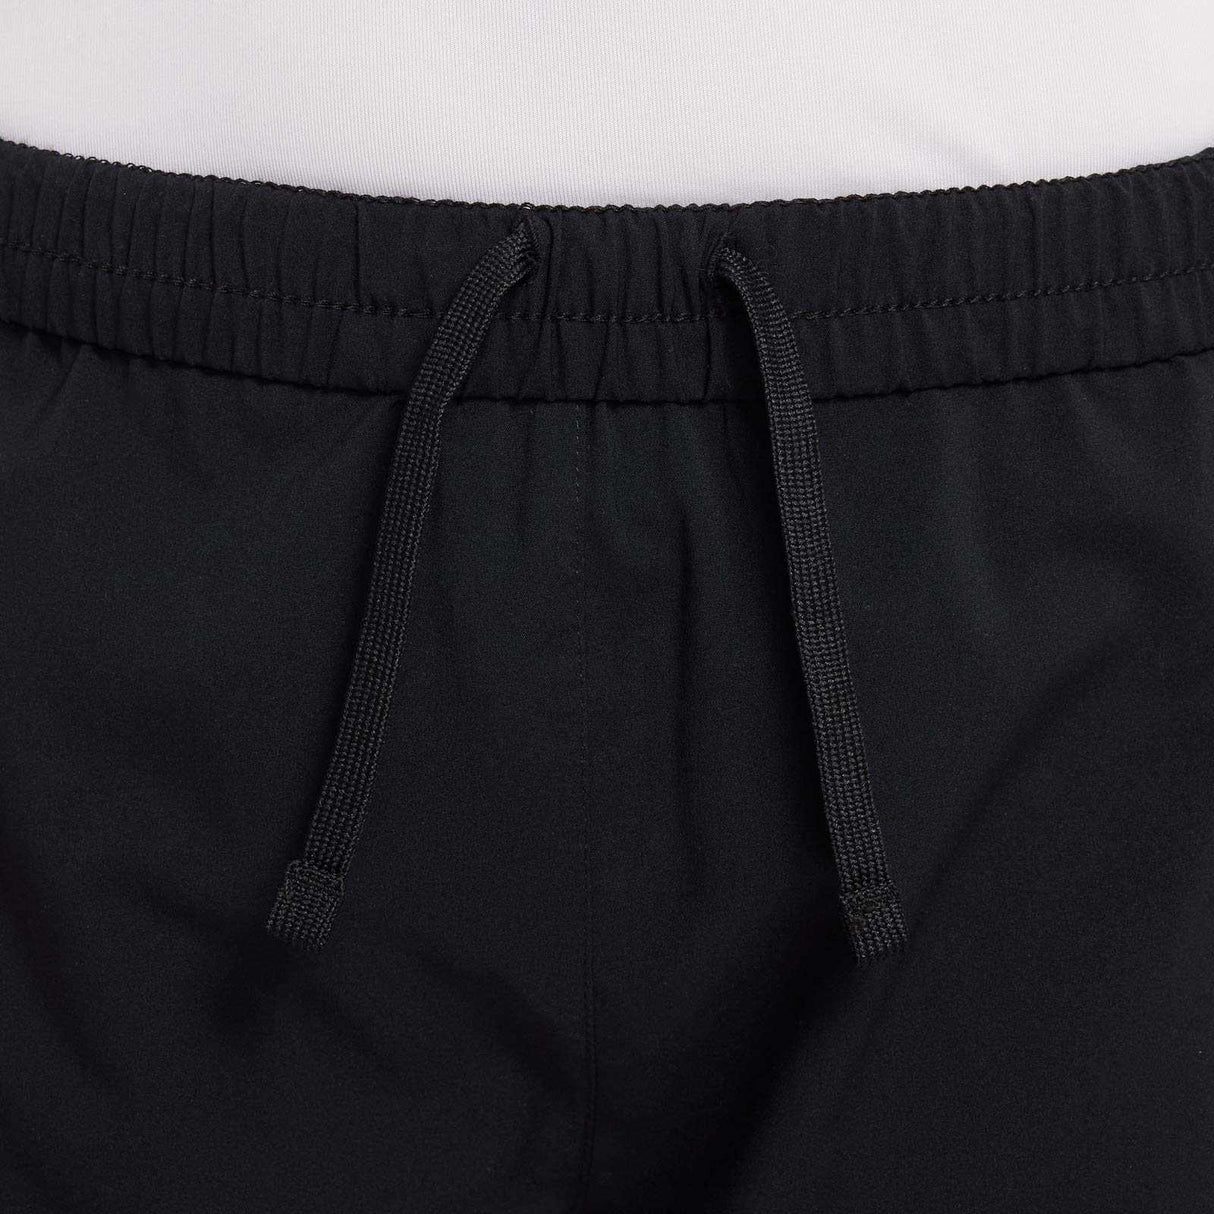 Nike Girls  DF One Woven HR Shorts Black